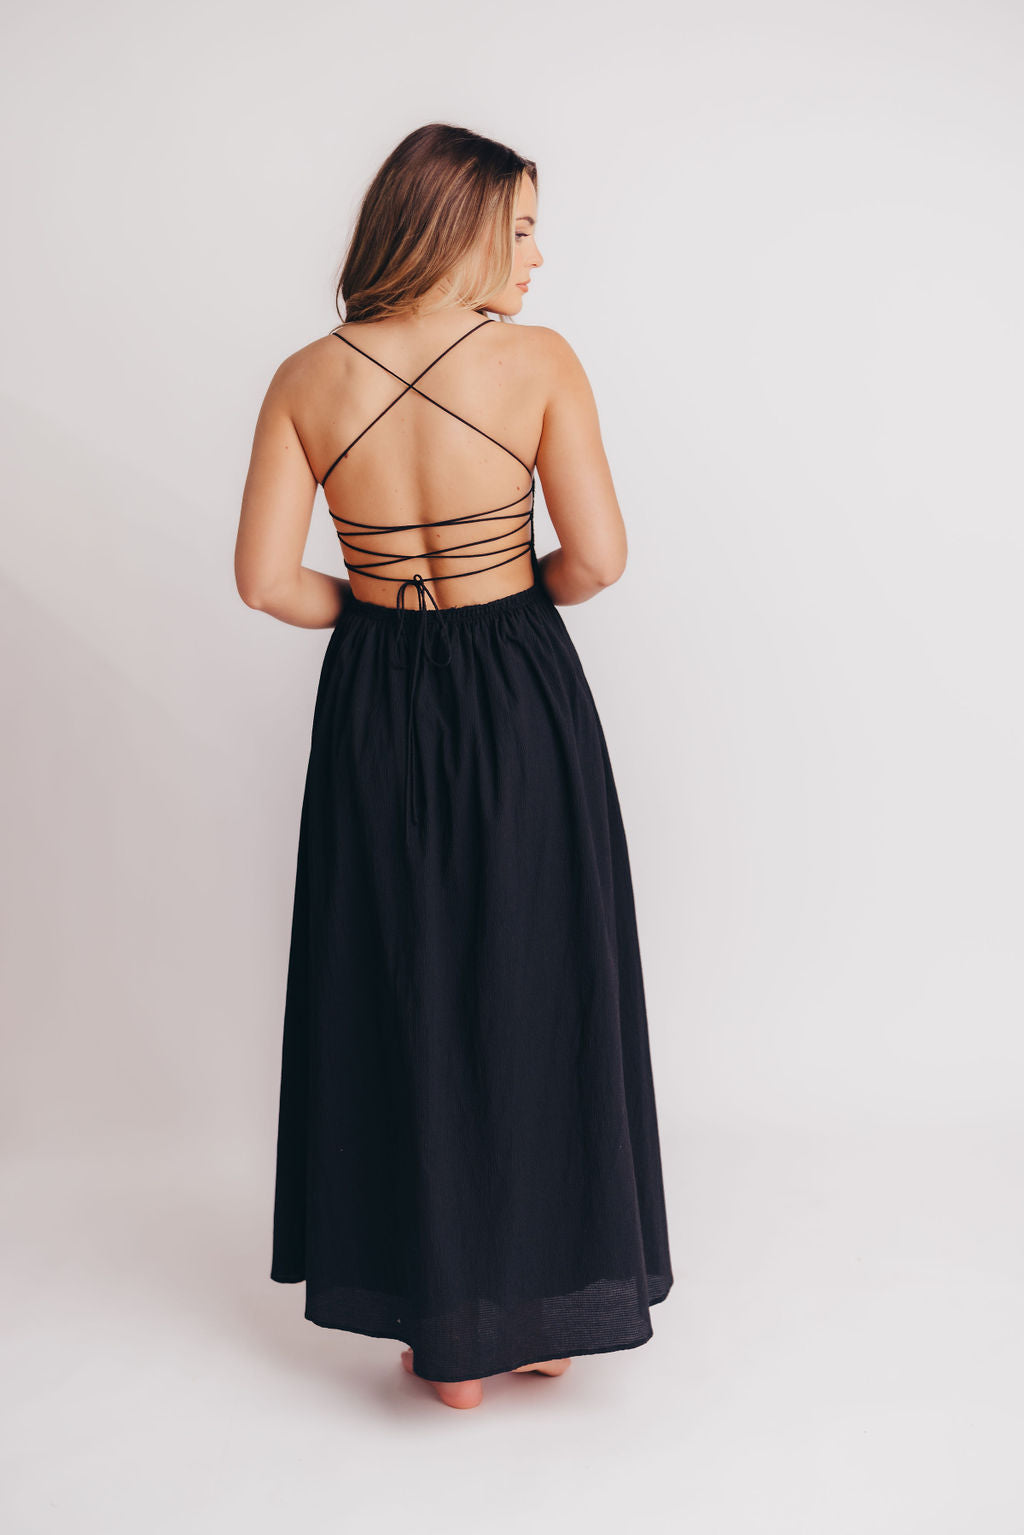 Serendipity Tie Back Maxi Dress in Black